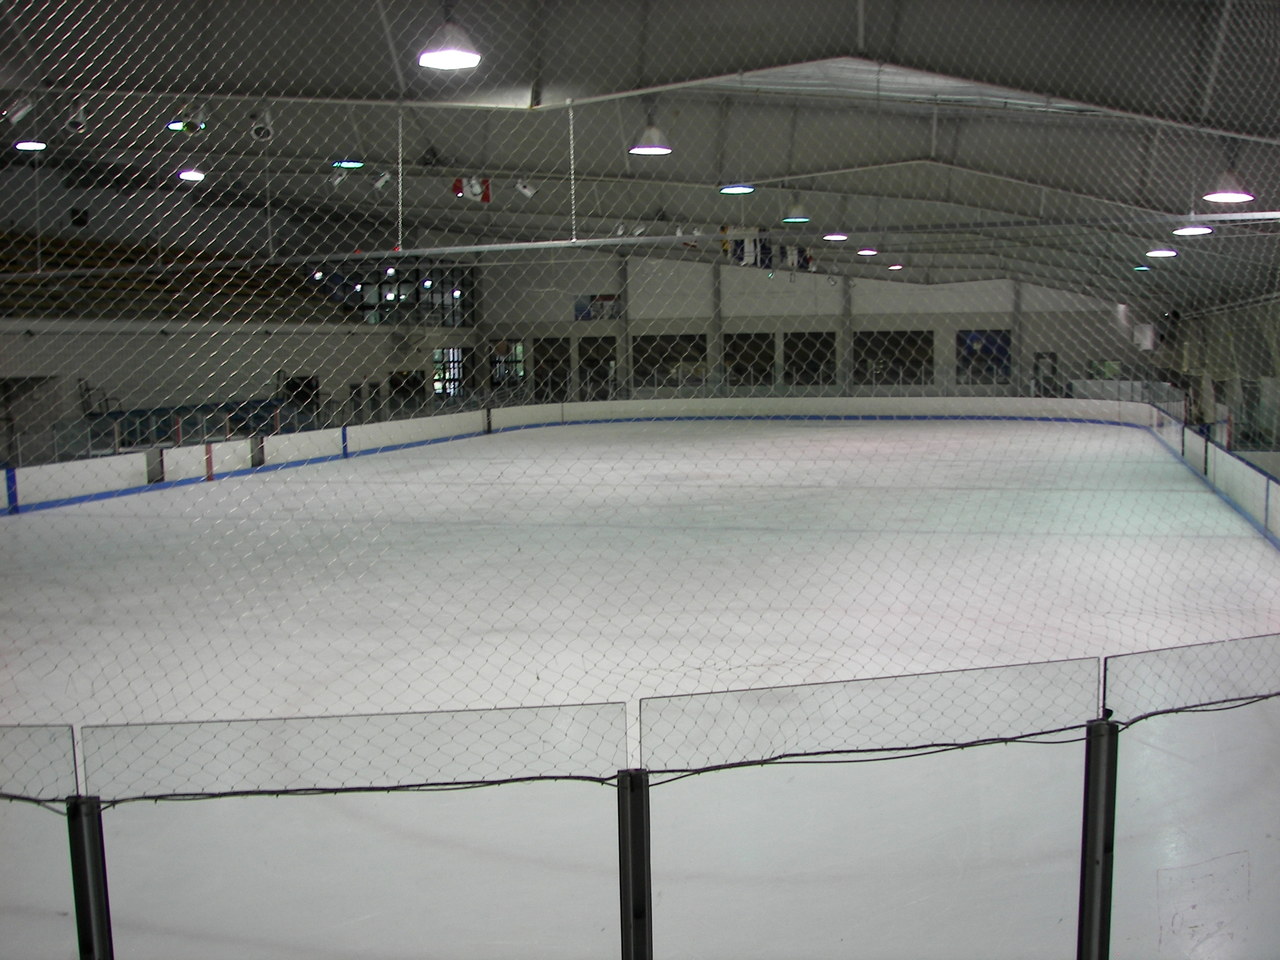 Centre Ice Arena